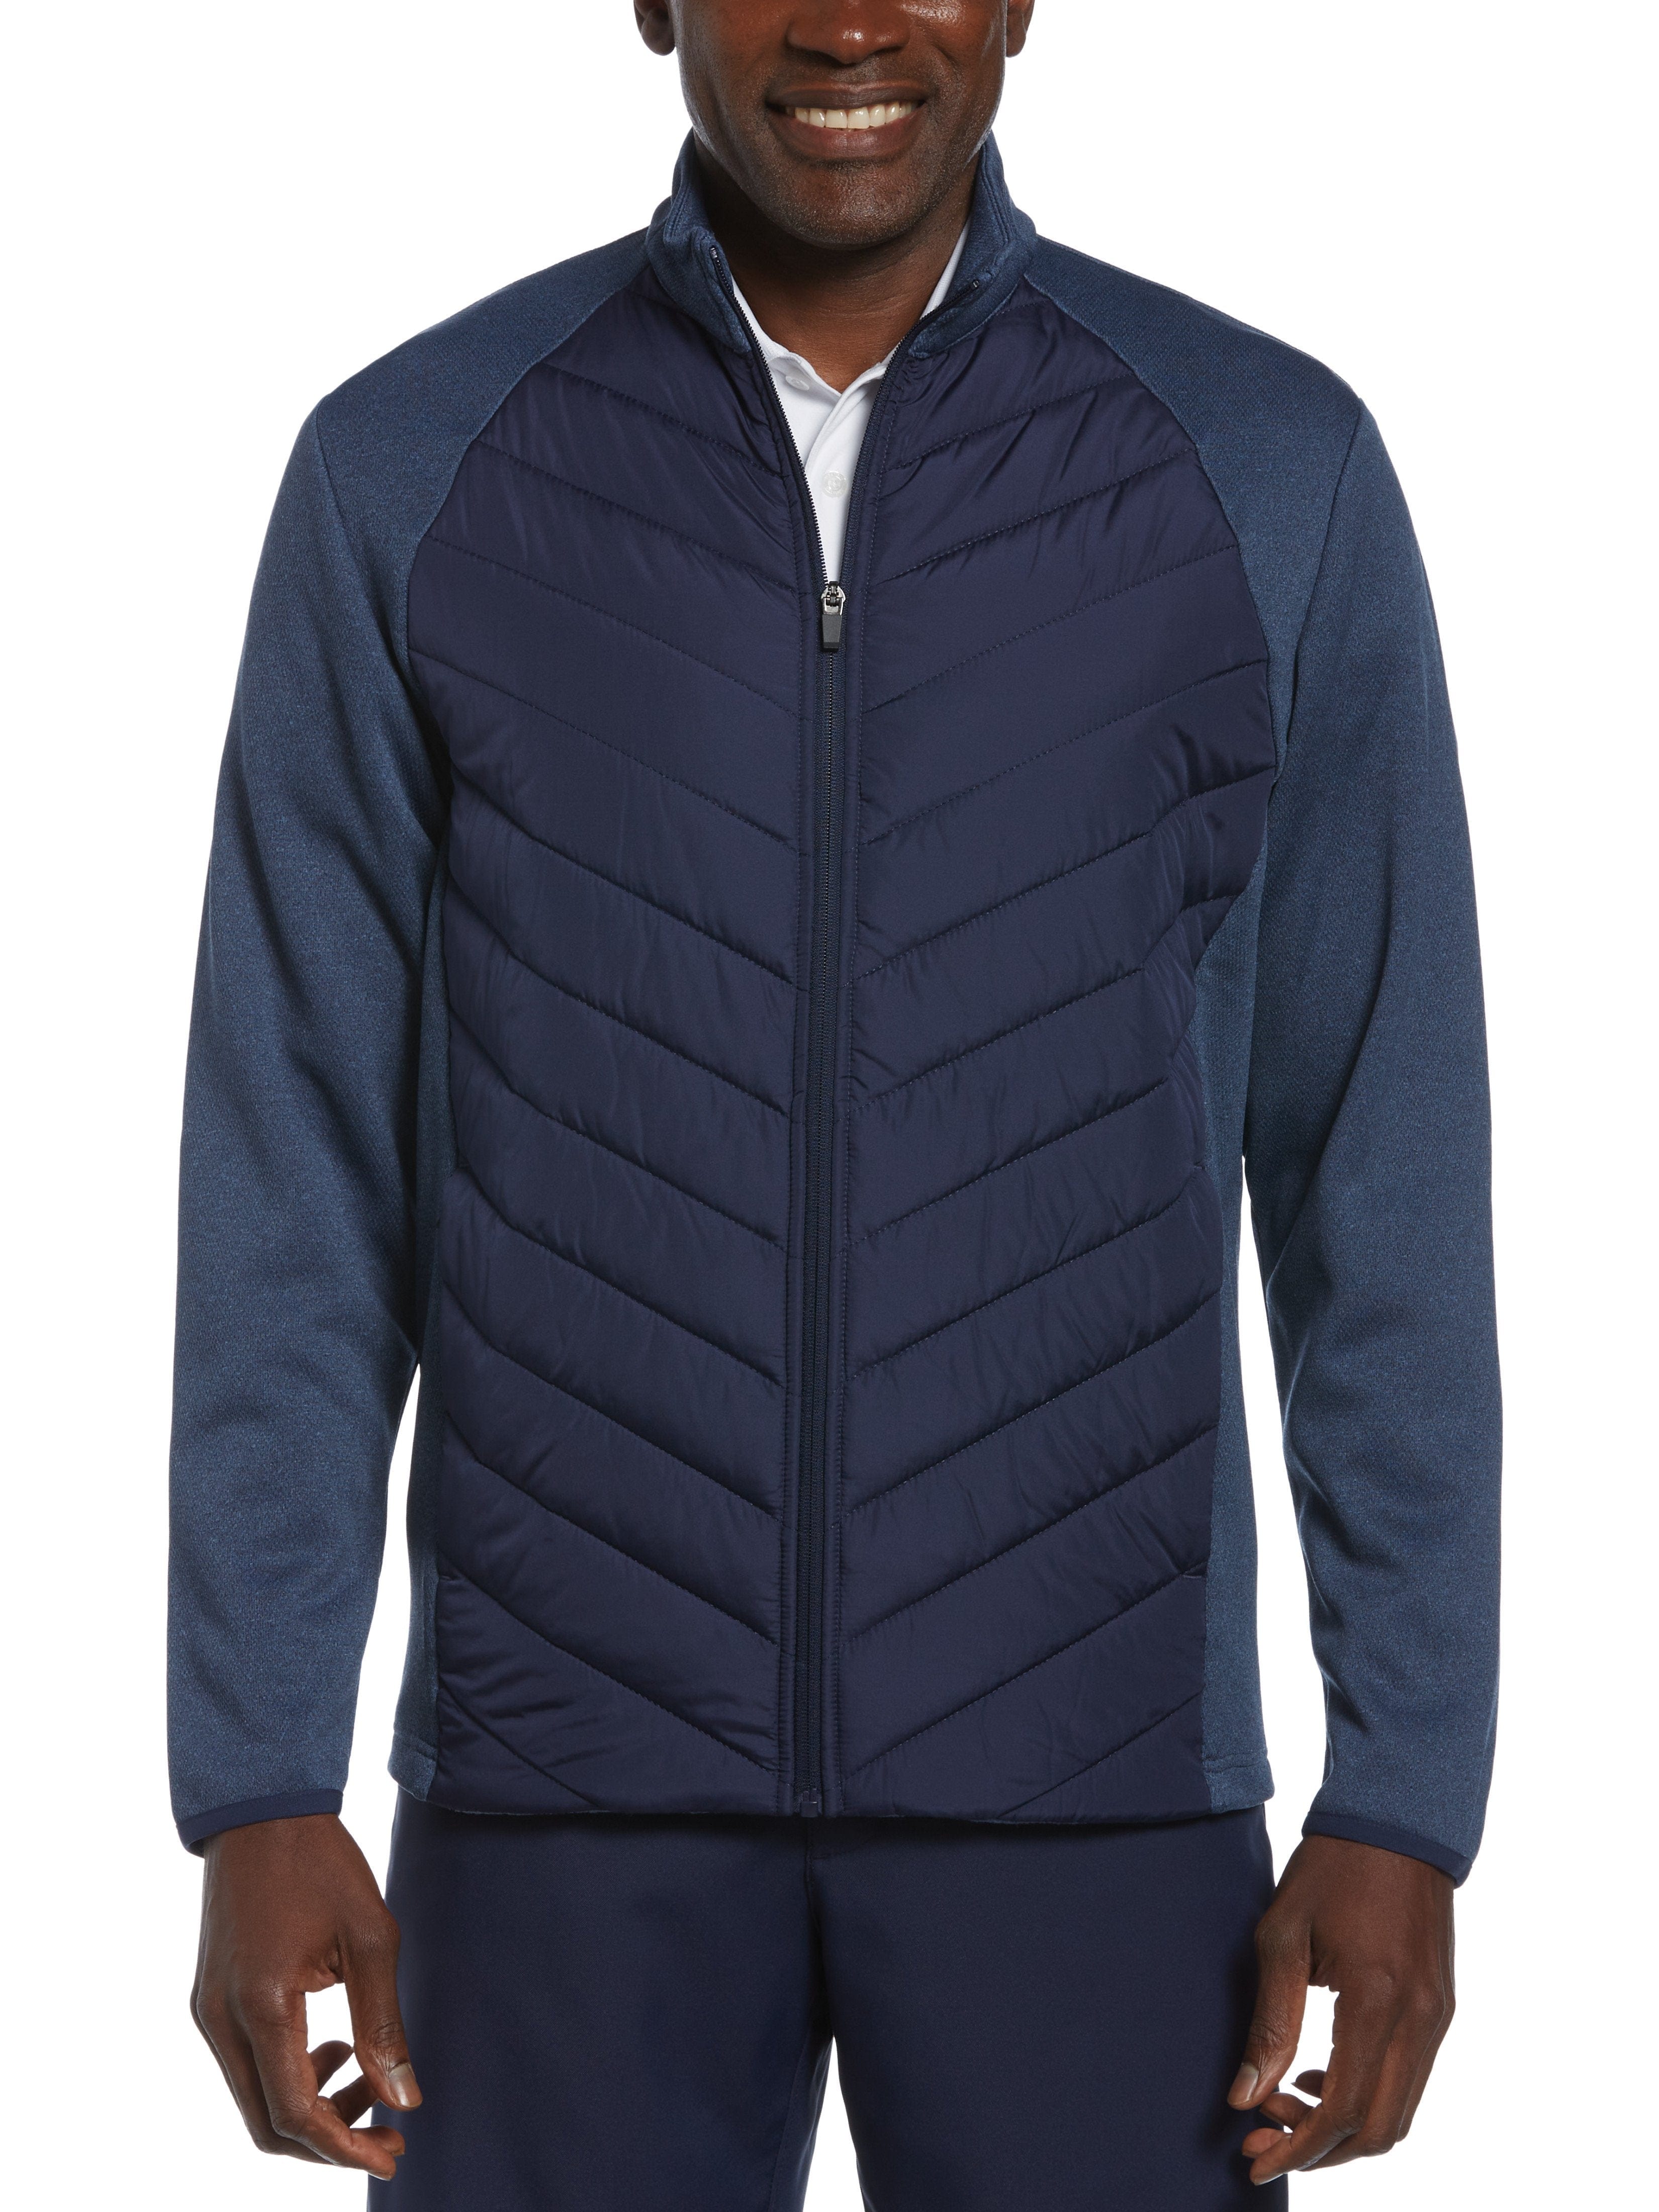 PGA TOUR Apparel Mens Hybrid Performance Puffer Golf Jacket Top, Size Medium, Peacoat Heather Blue, 100% Polyester | Golf Apparel Shop